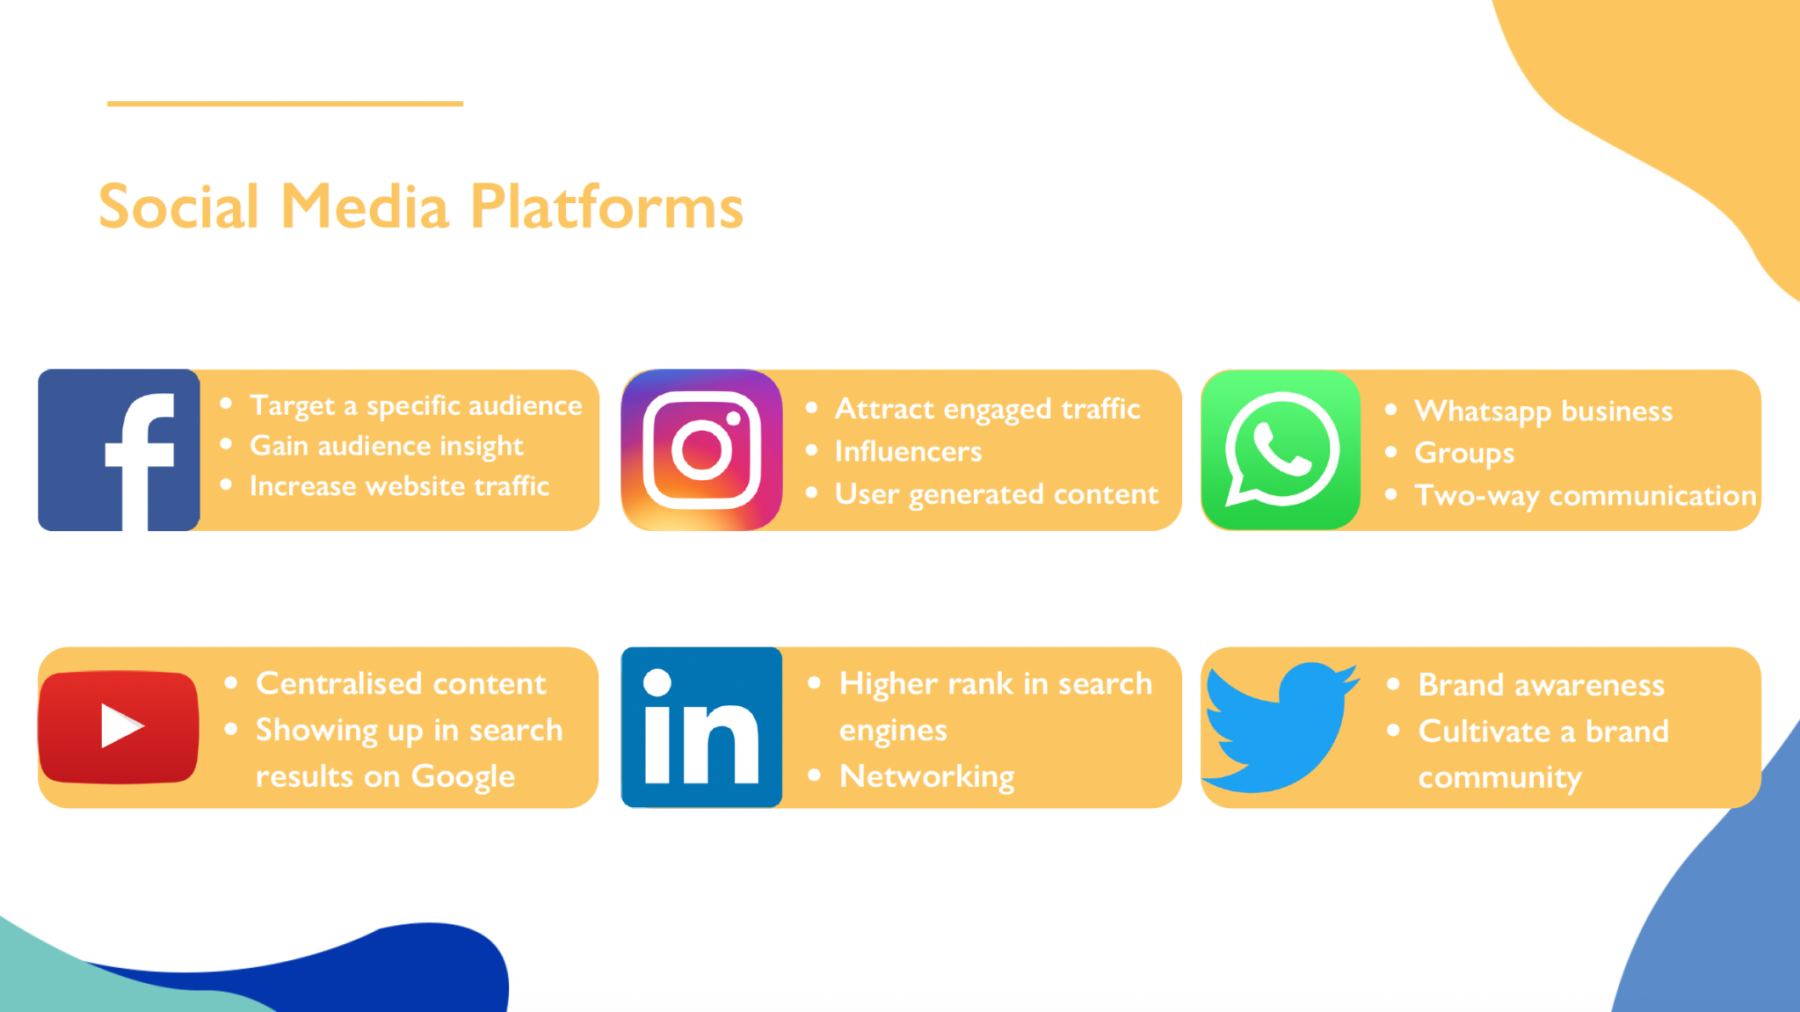 Leverage the distinct capabilities of each social media platform.